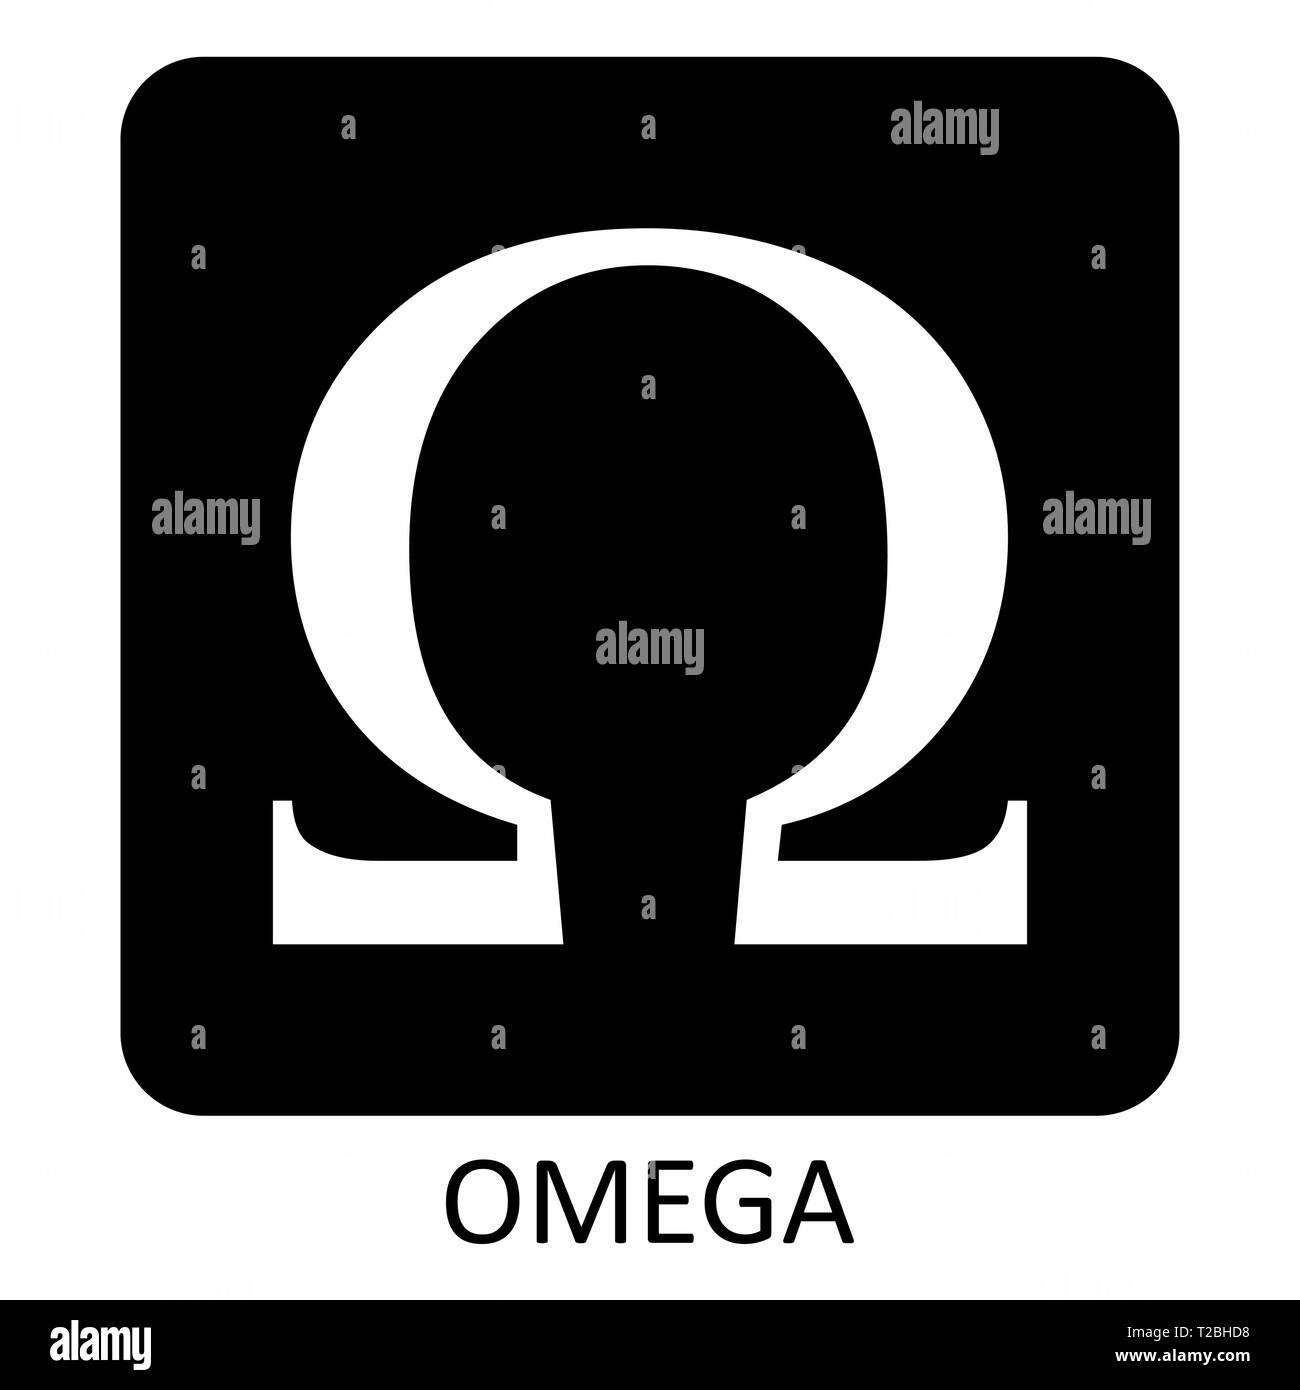 Omega symbol illustration Stock Vector